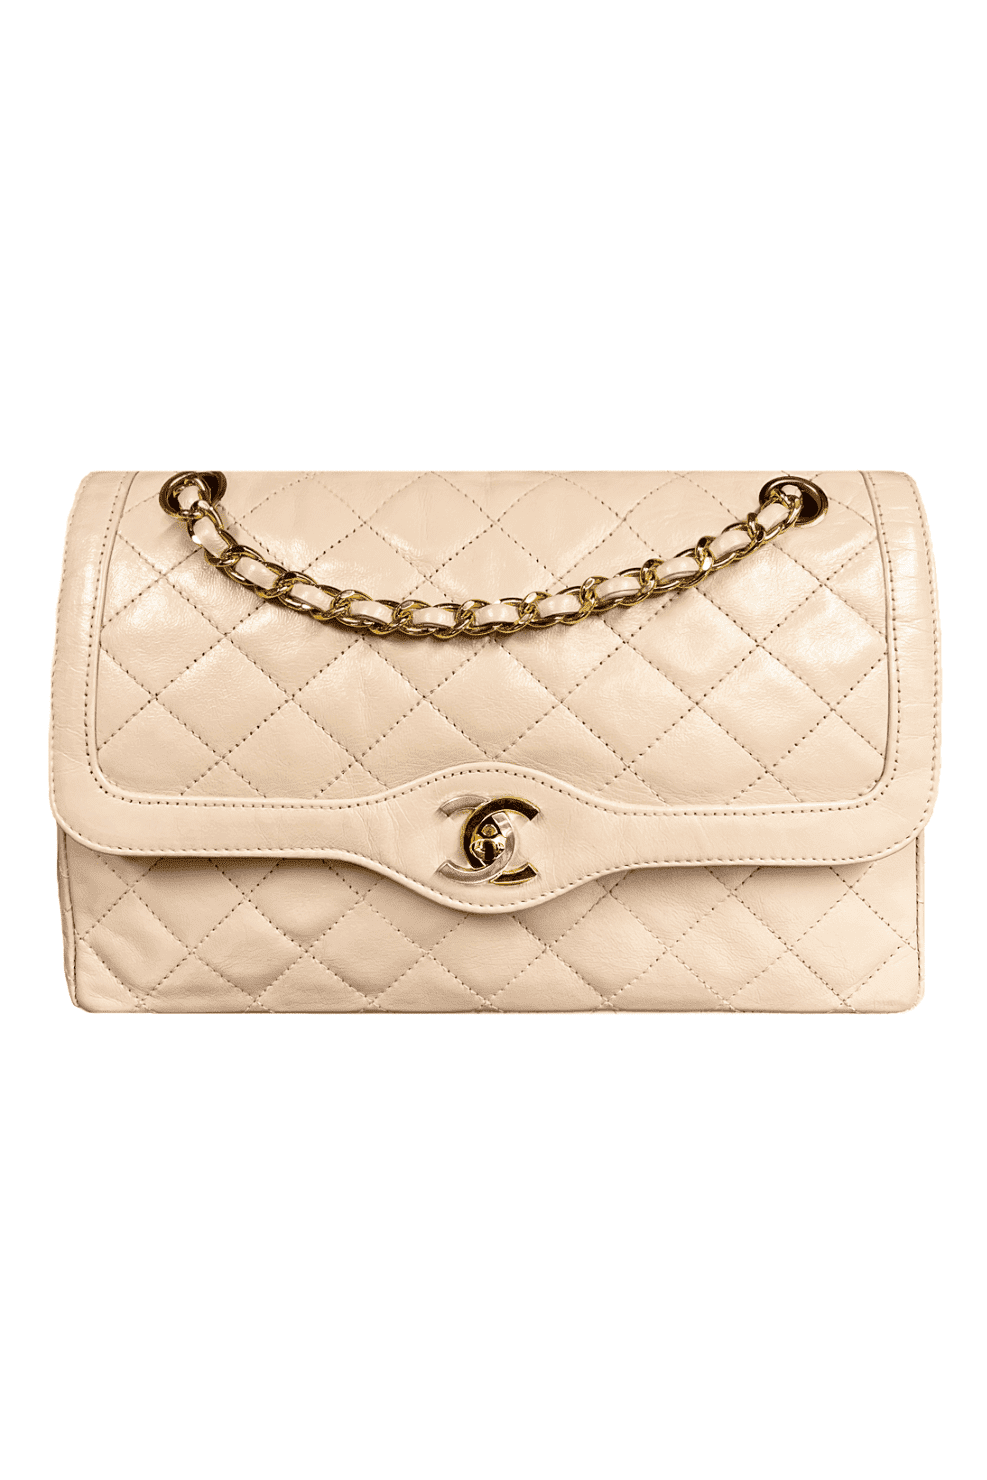 vintage chanel bag  Chanel bag, Chanel classic flap bag, Chanel classic  flap beige